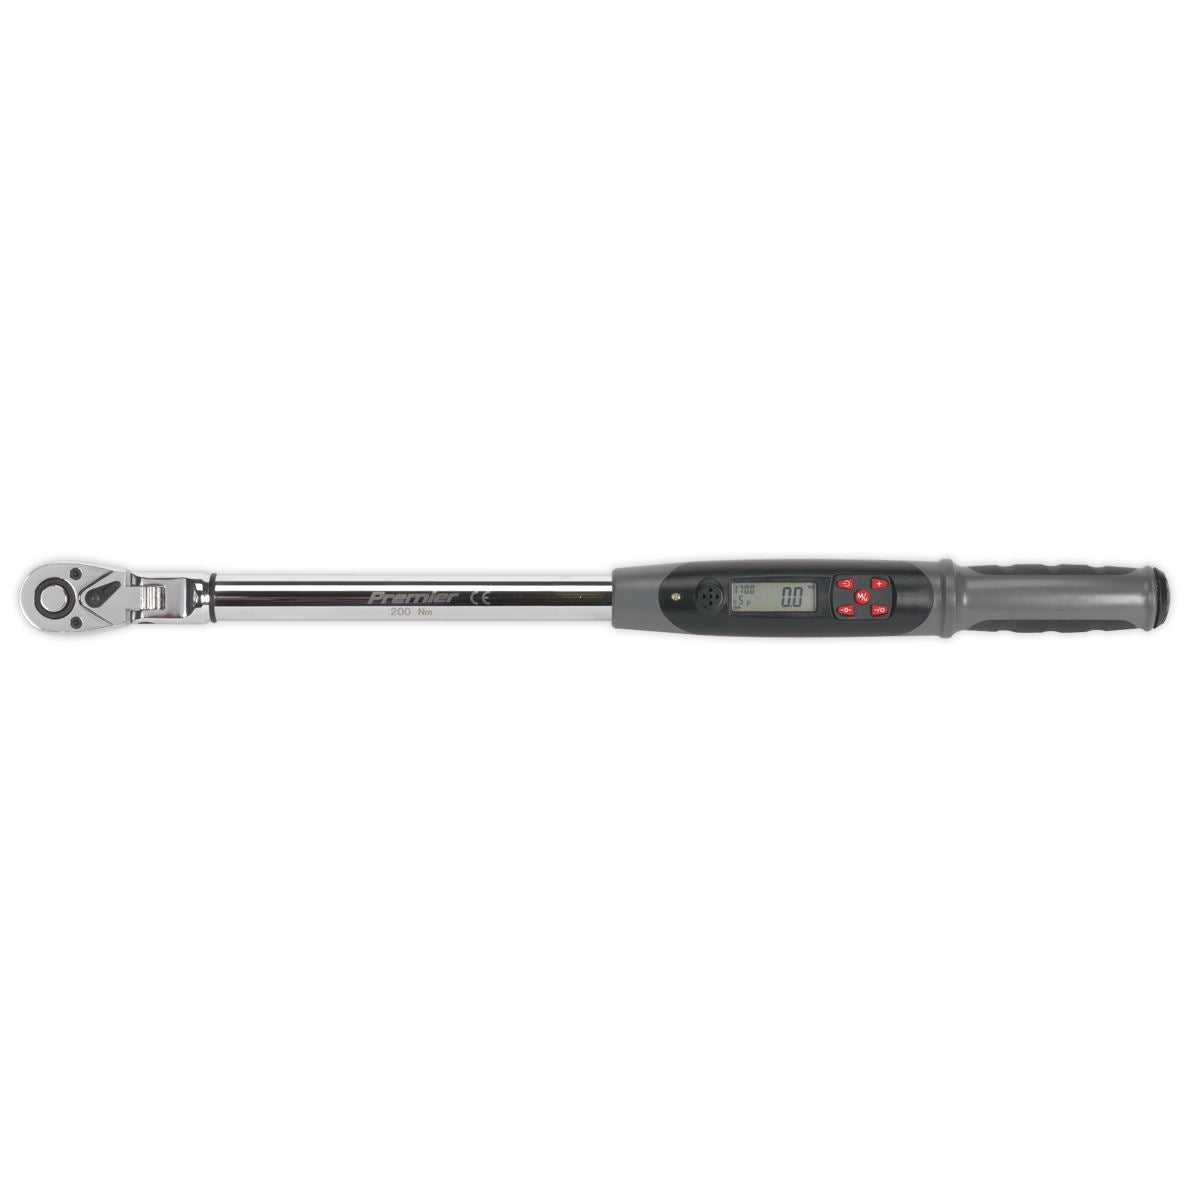 Sealey Premier Angle Torque Wrench Flexi-Head Digital 1/2"Sq Drive 20-200Nm(14.7-147.5lb.ft)